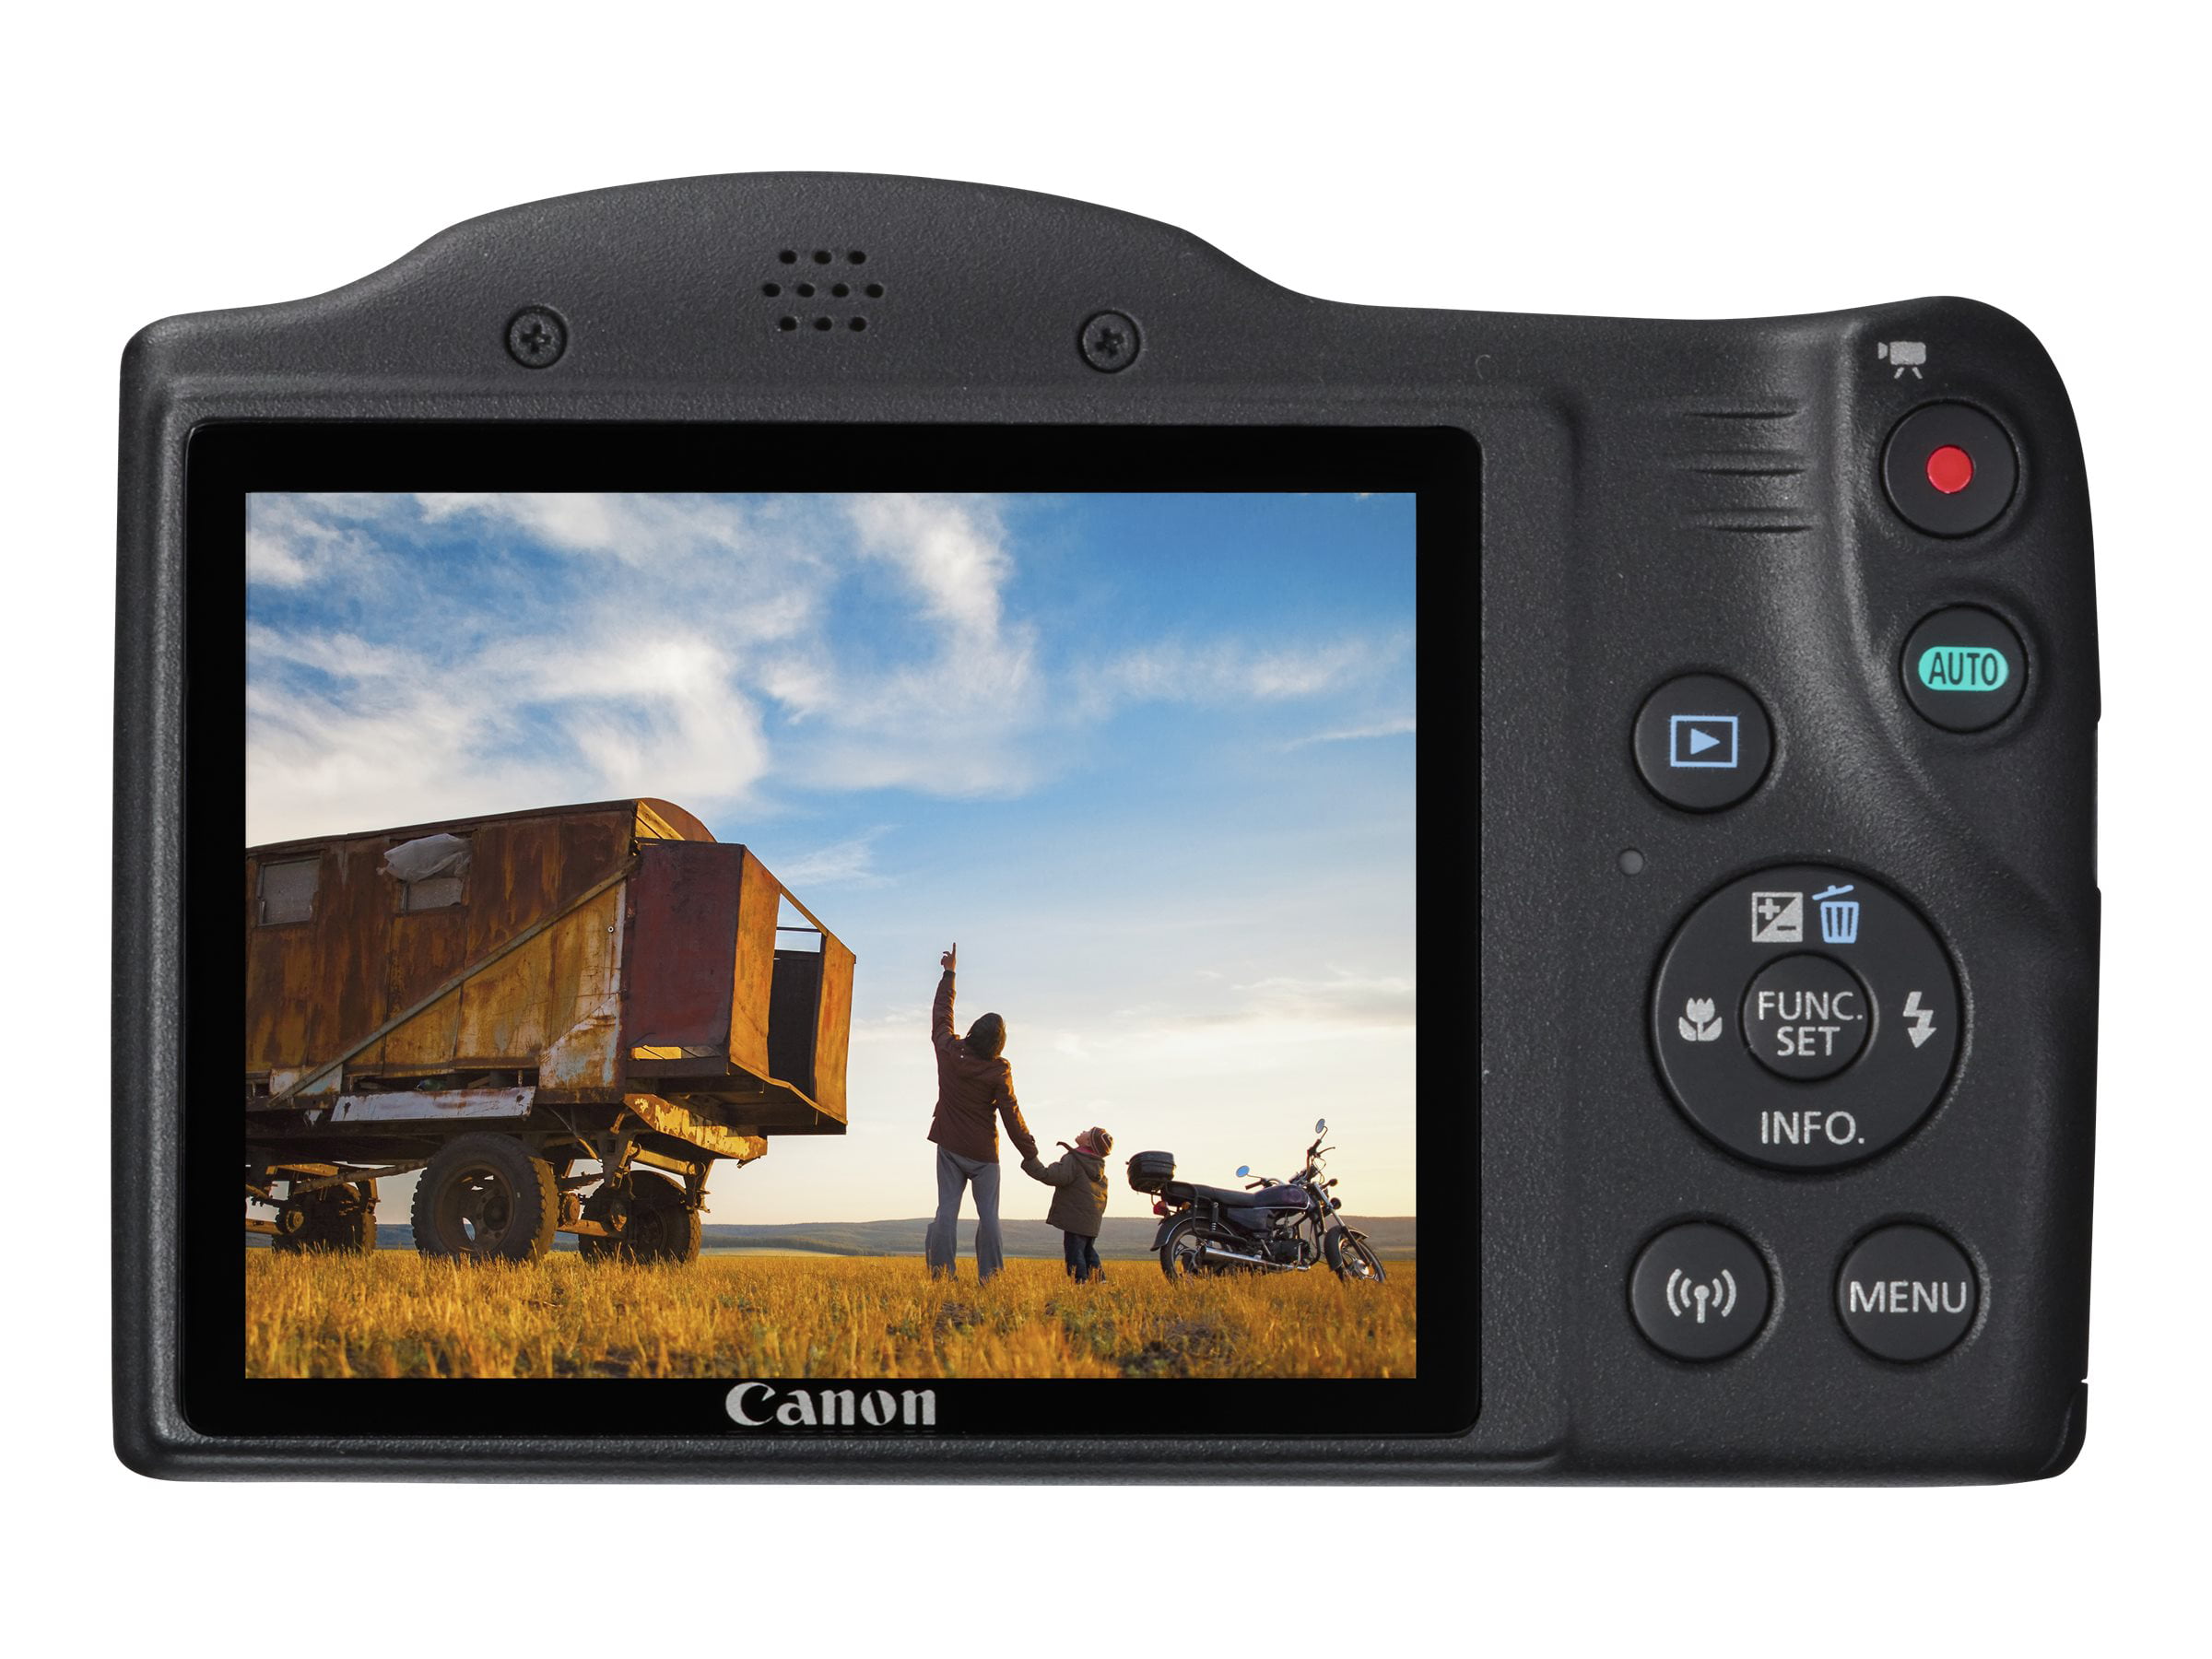 draagbaar ontslaan Bereid Canon PowerShot SX420 IS - Digital camera - compact - 20.0 MP - 720p / 25  fps - 42x optical zoom - Wi-Fi, NFC - black - Walmart.com